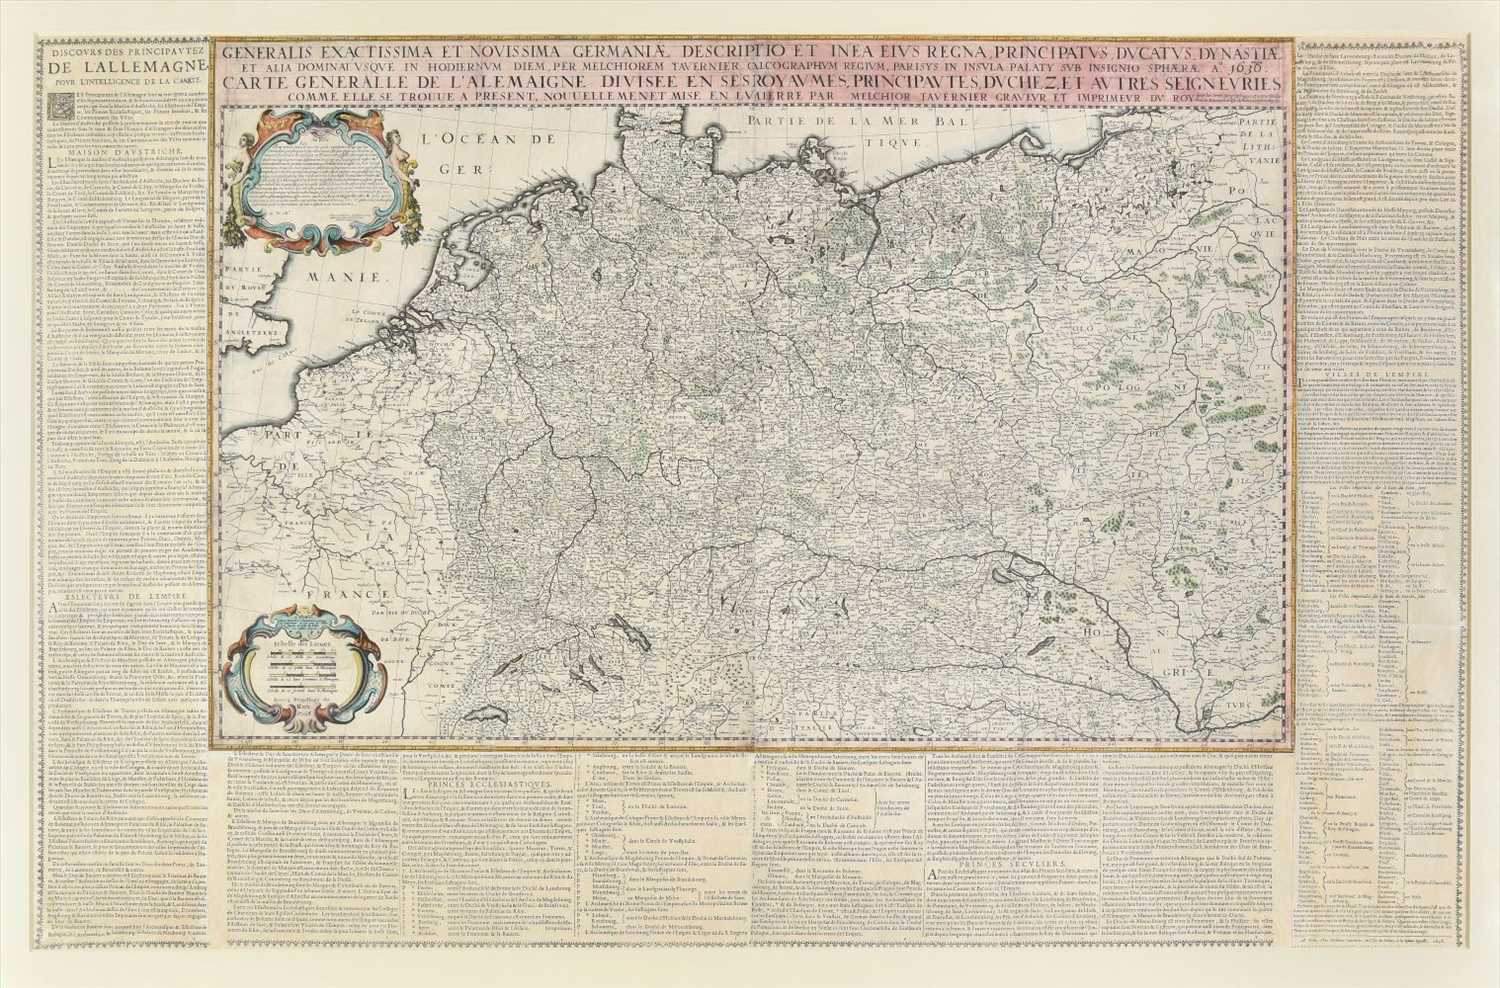 Lot 94 - Germany & Northern Europe. Tavernier (Melchior), 1638